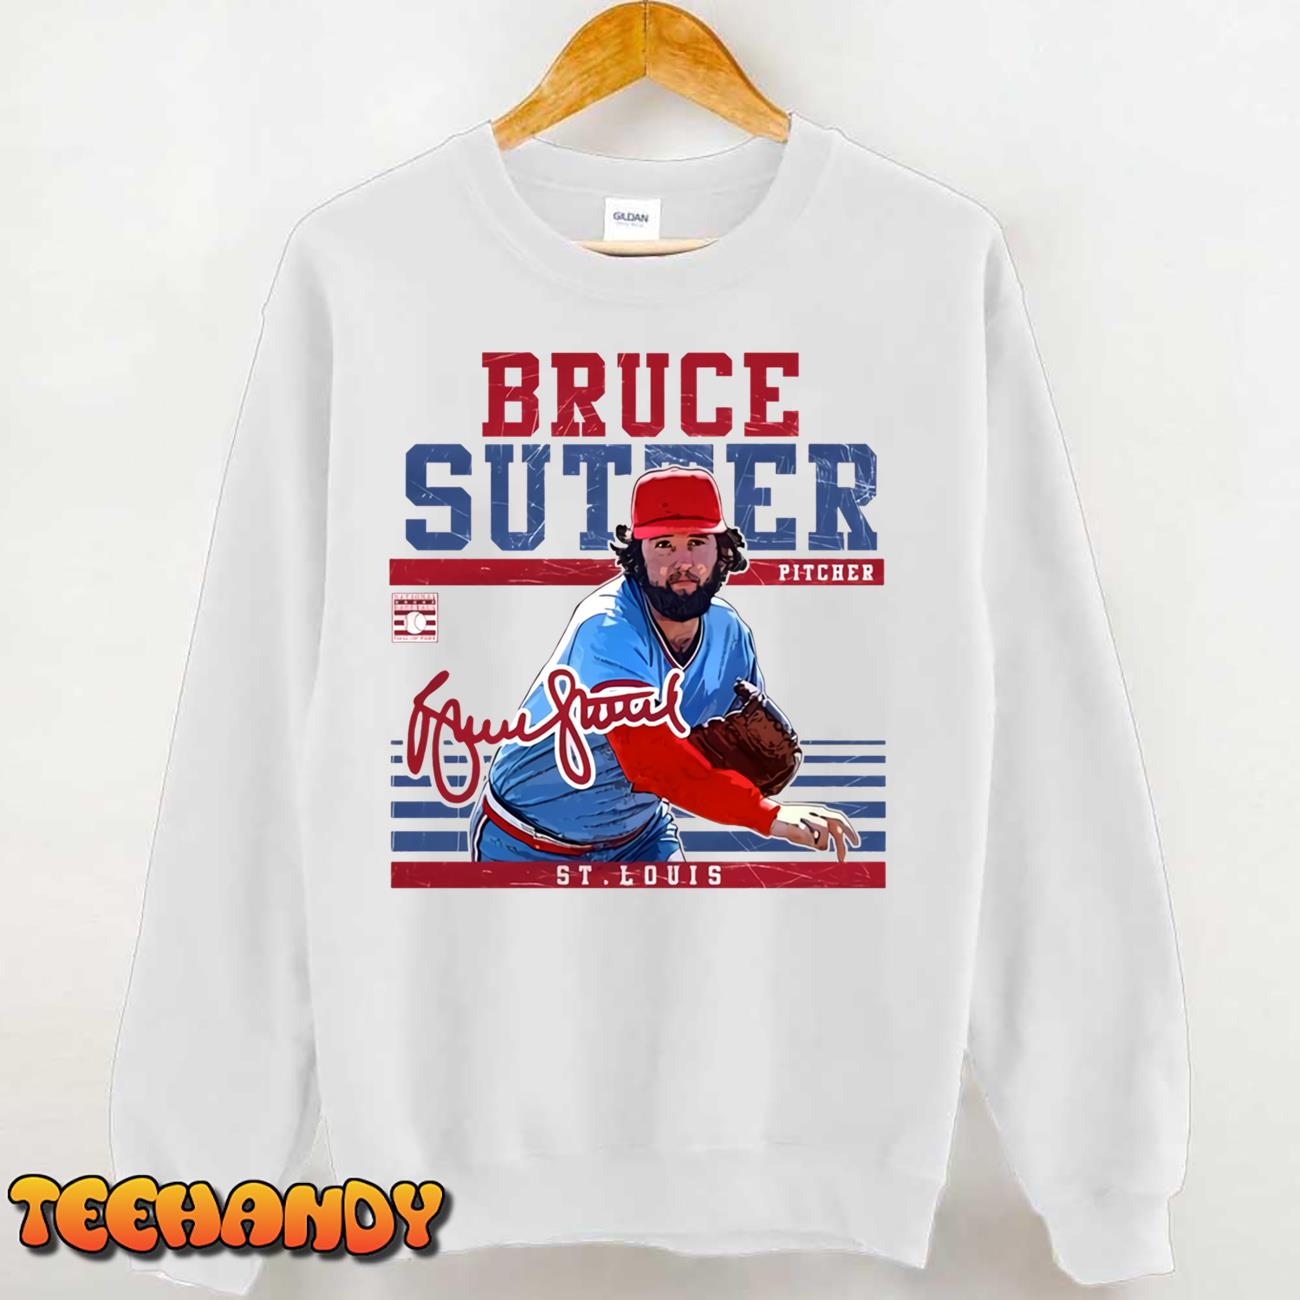 Bruce Sutter 500 Level Rip Bruce Sutter Unisex T-Shirt